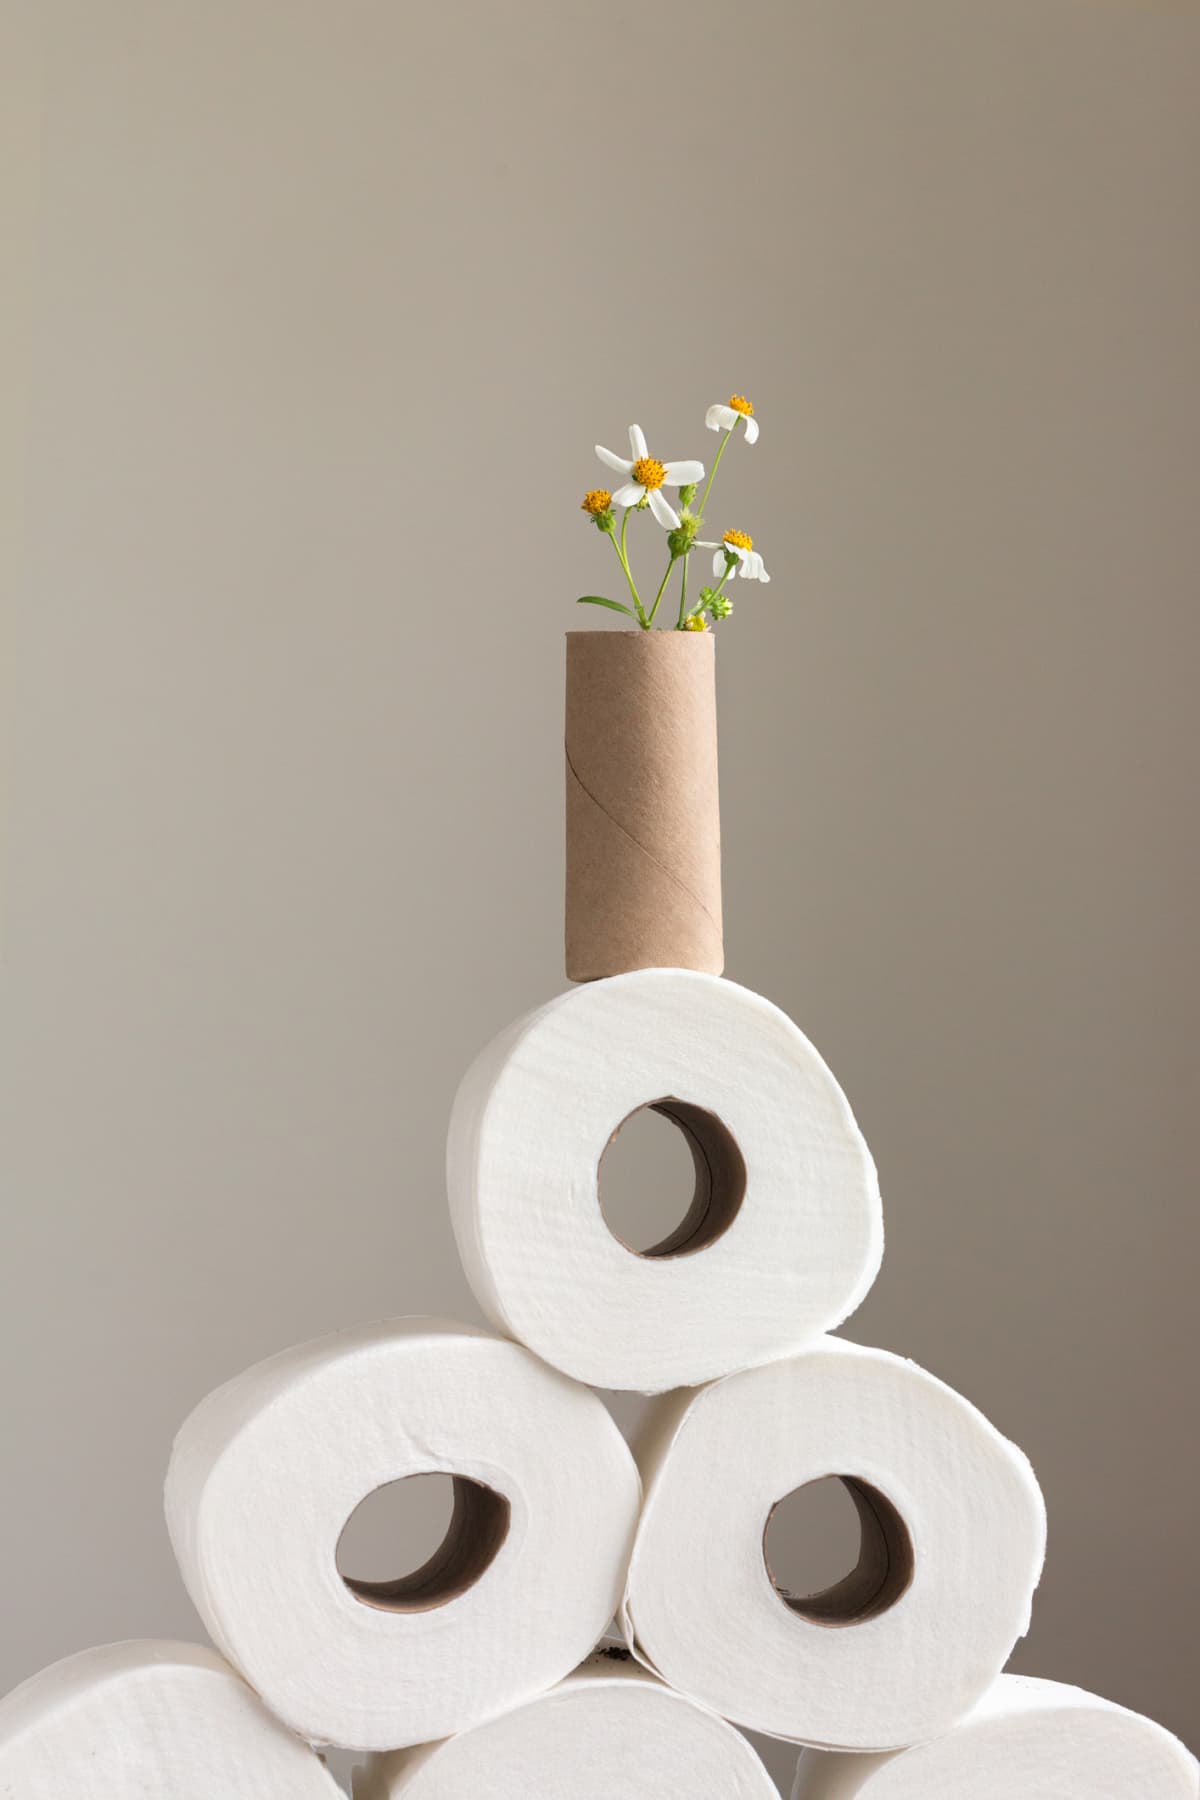 Wildflower growing in toilet paper roll